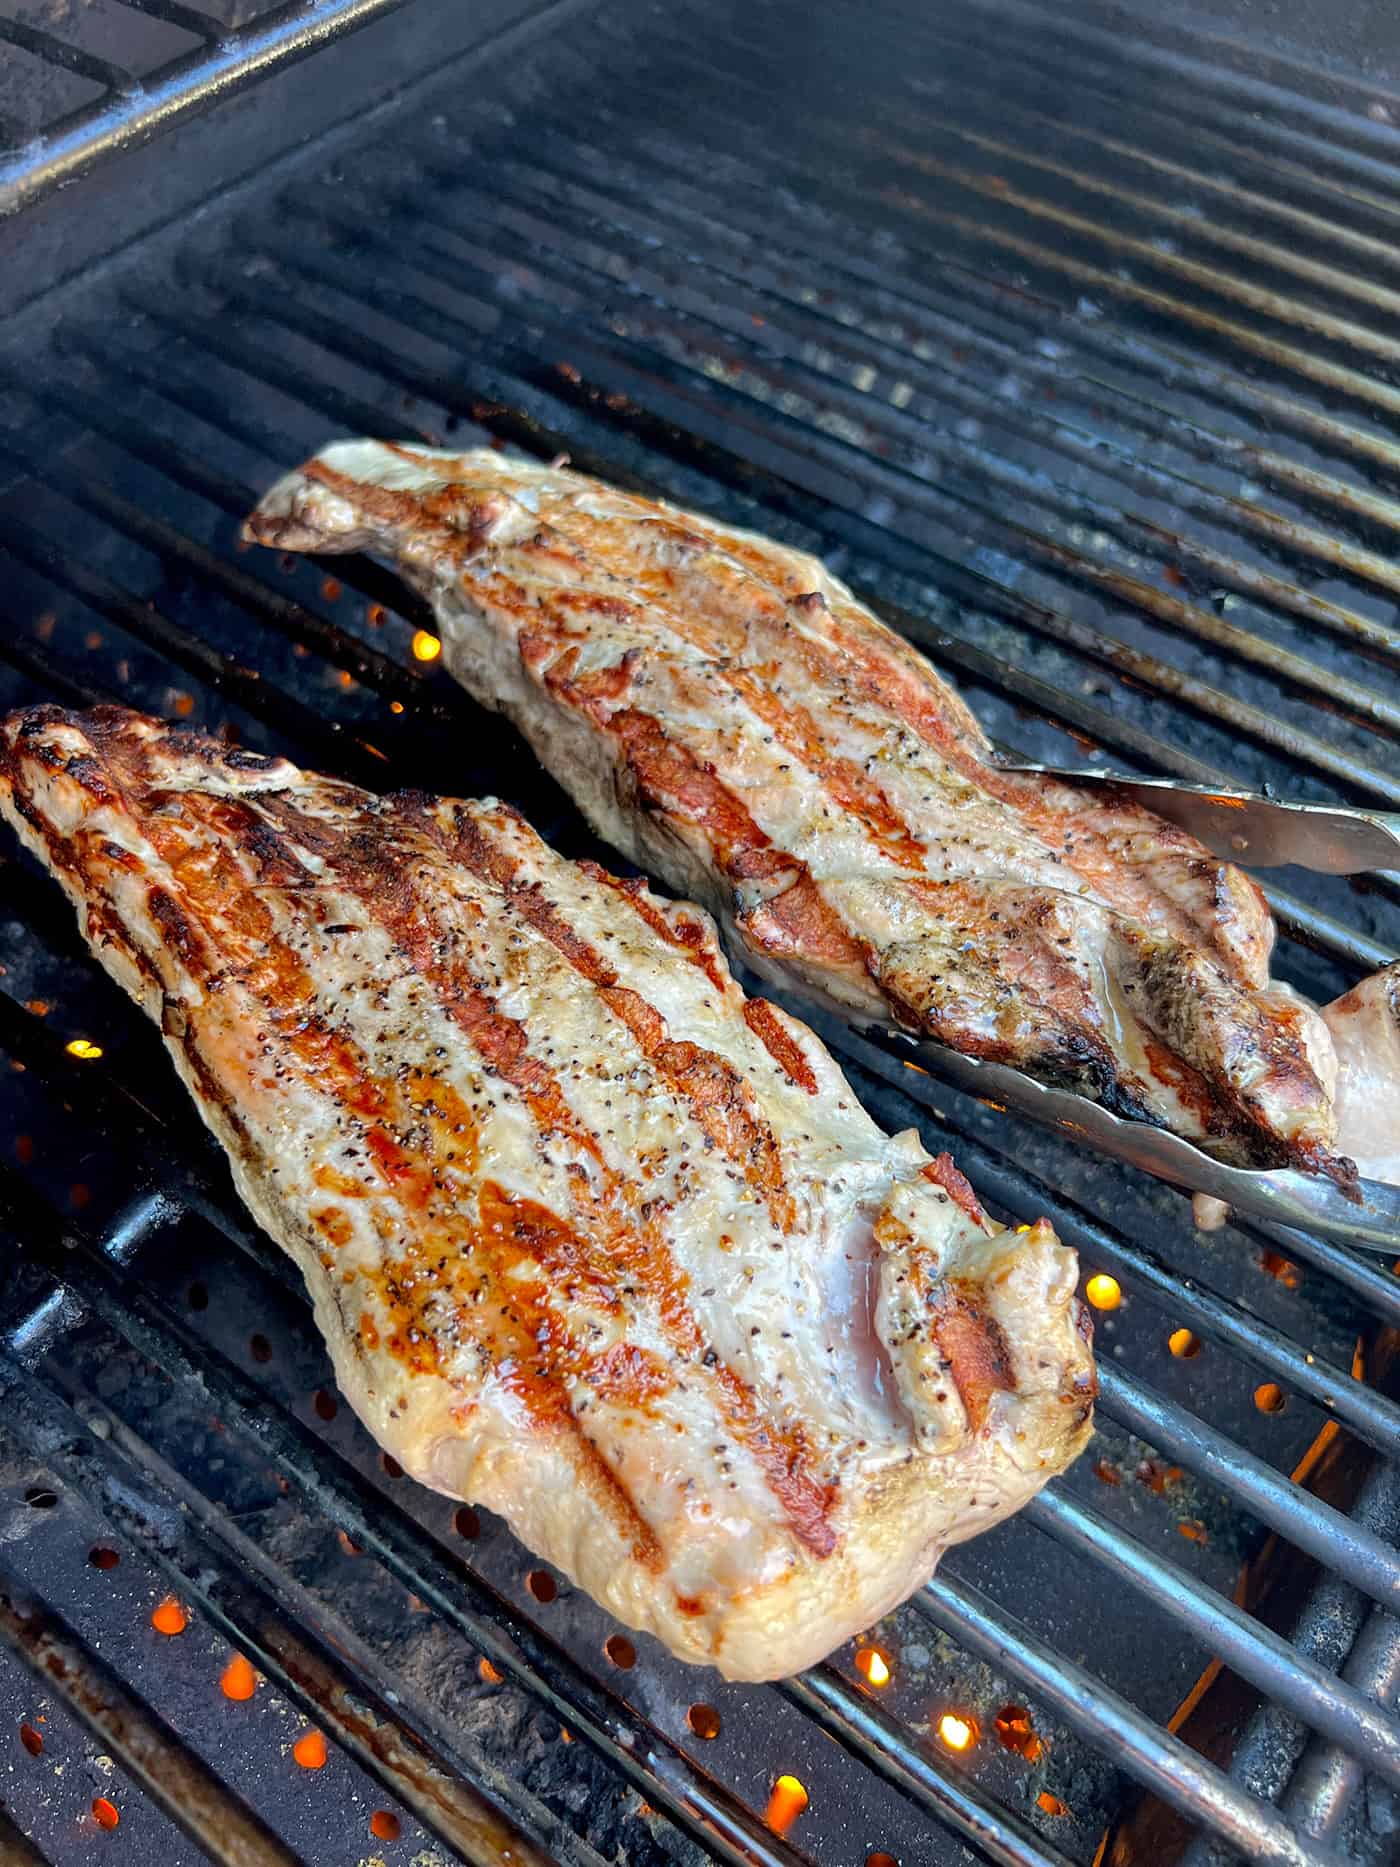 Seared pork tenderloins on the grill